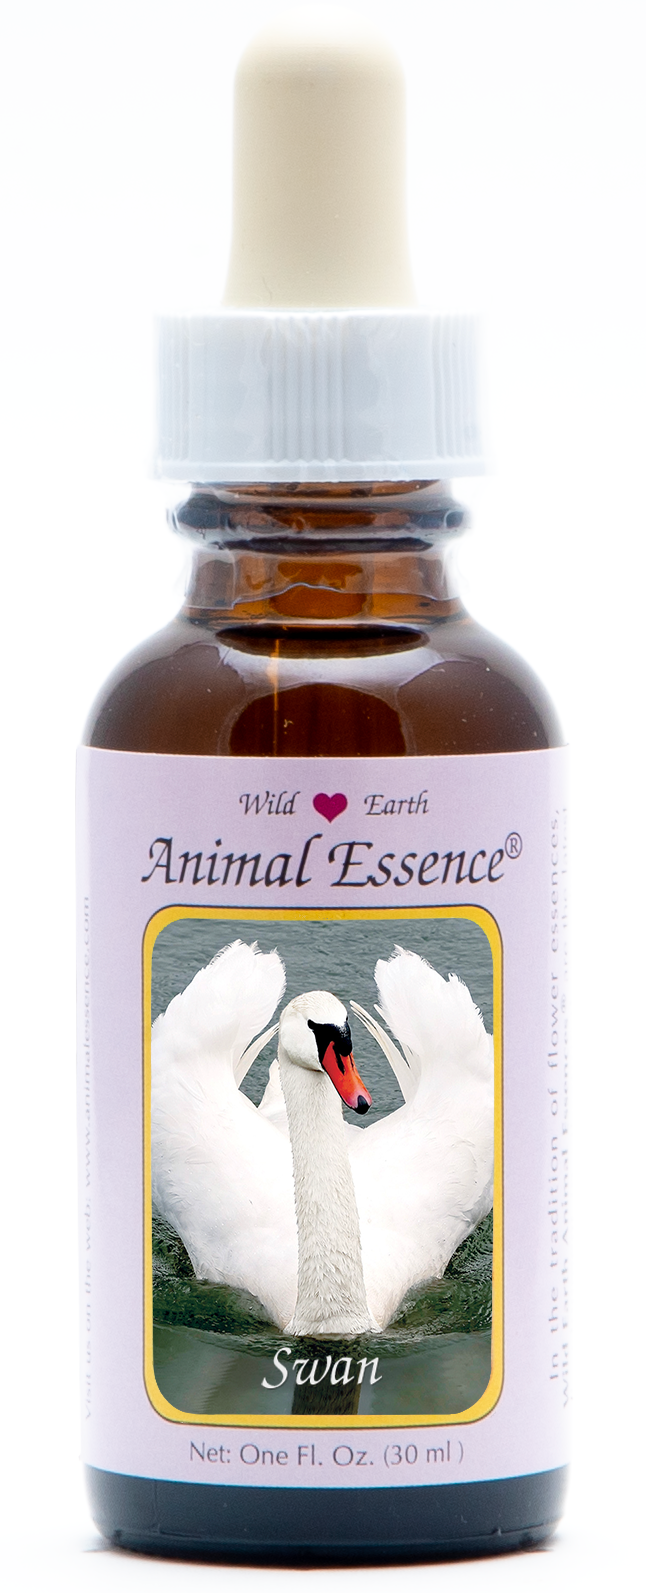 Swan animal essence 30ml